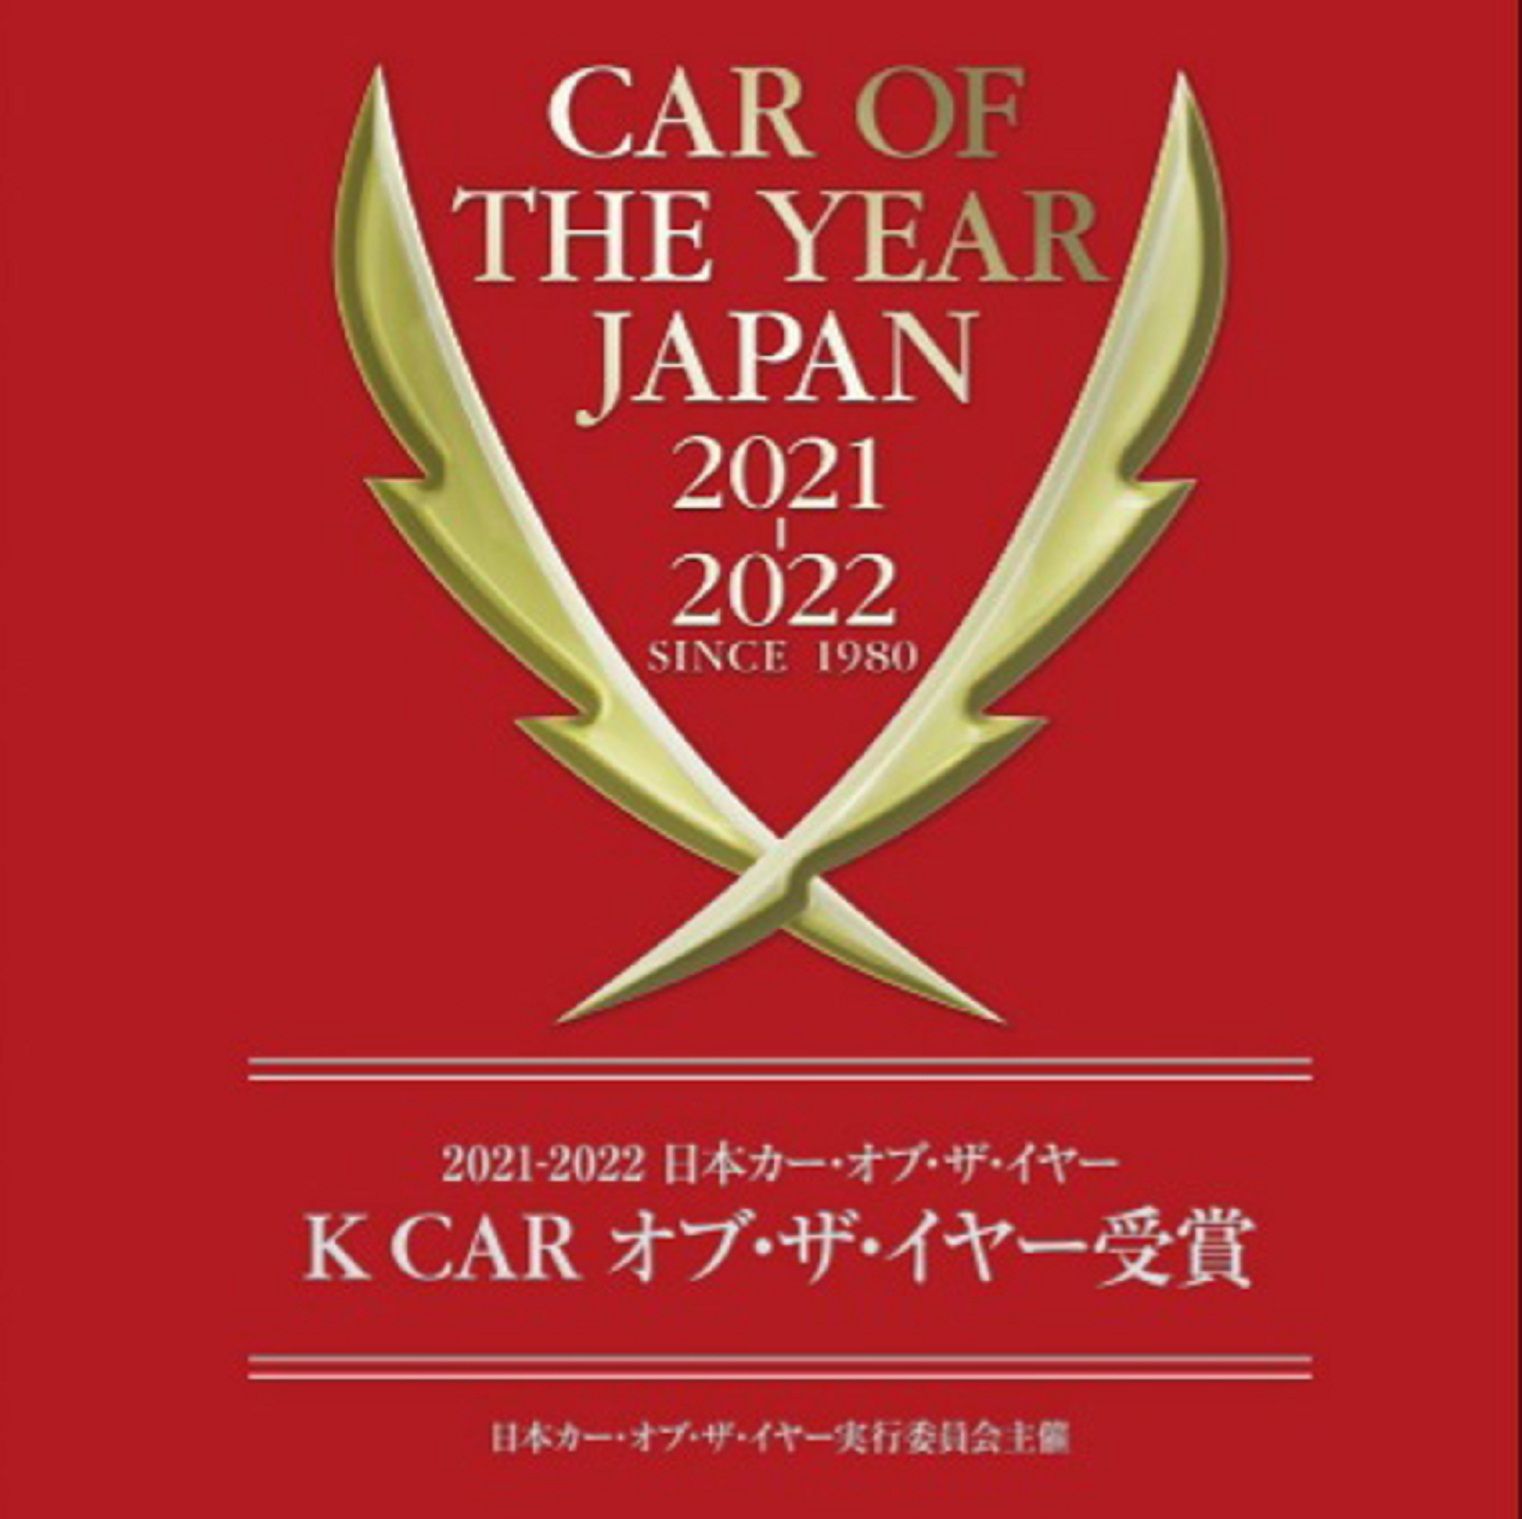  Penghargaan Car of the Year pada ajang Japan Car of the Year 2021-2022./